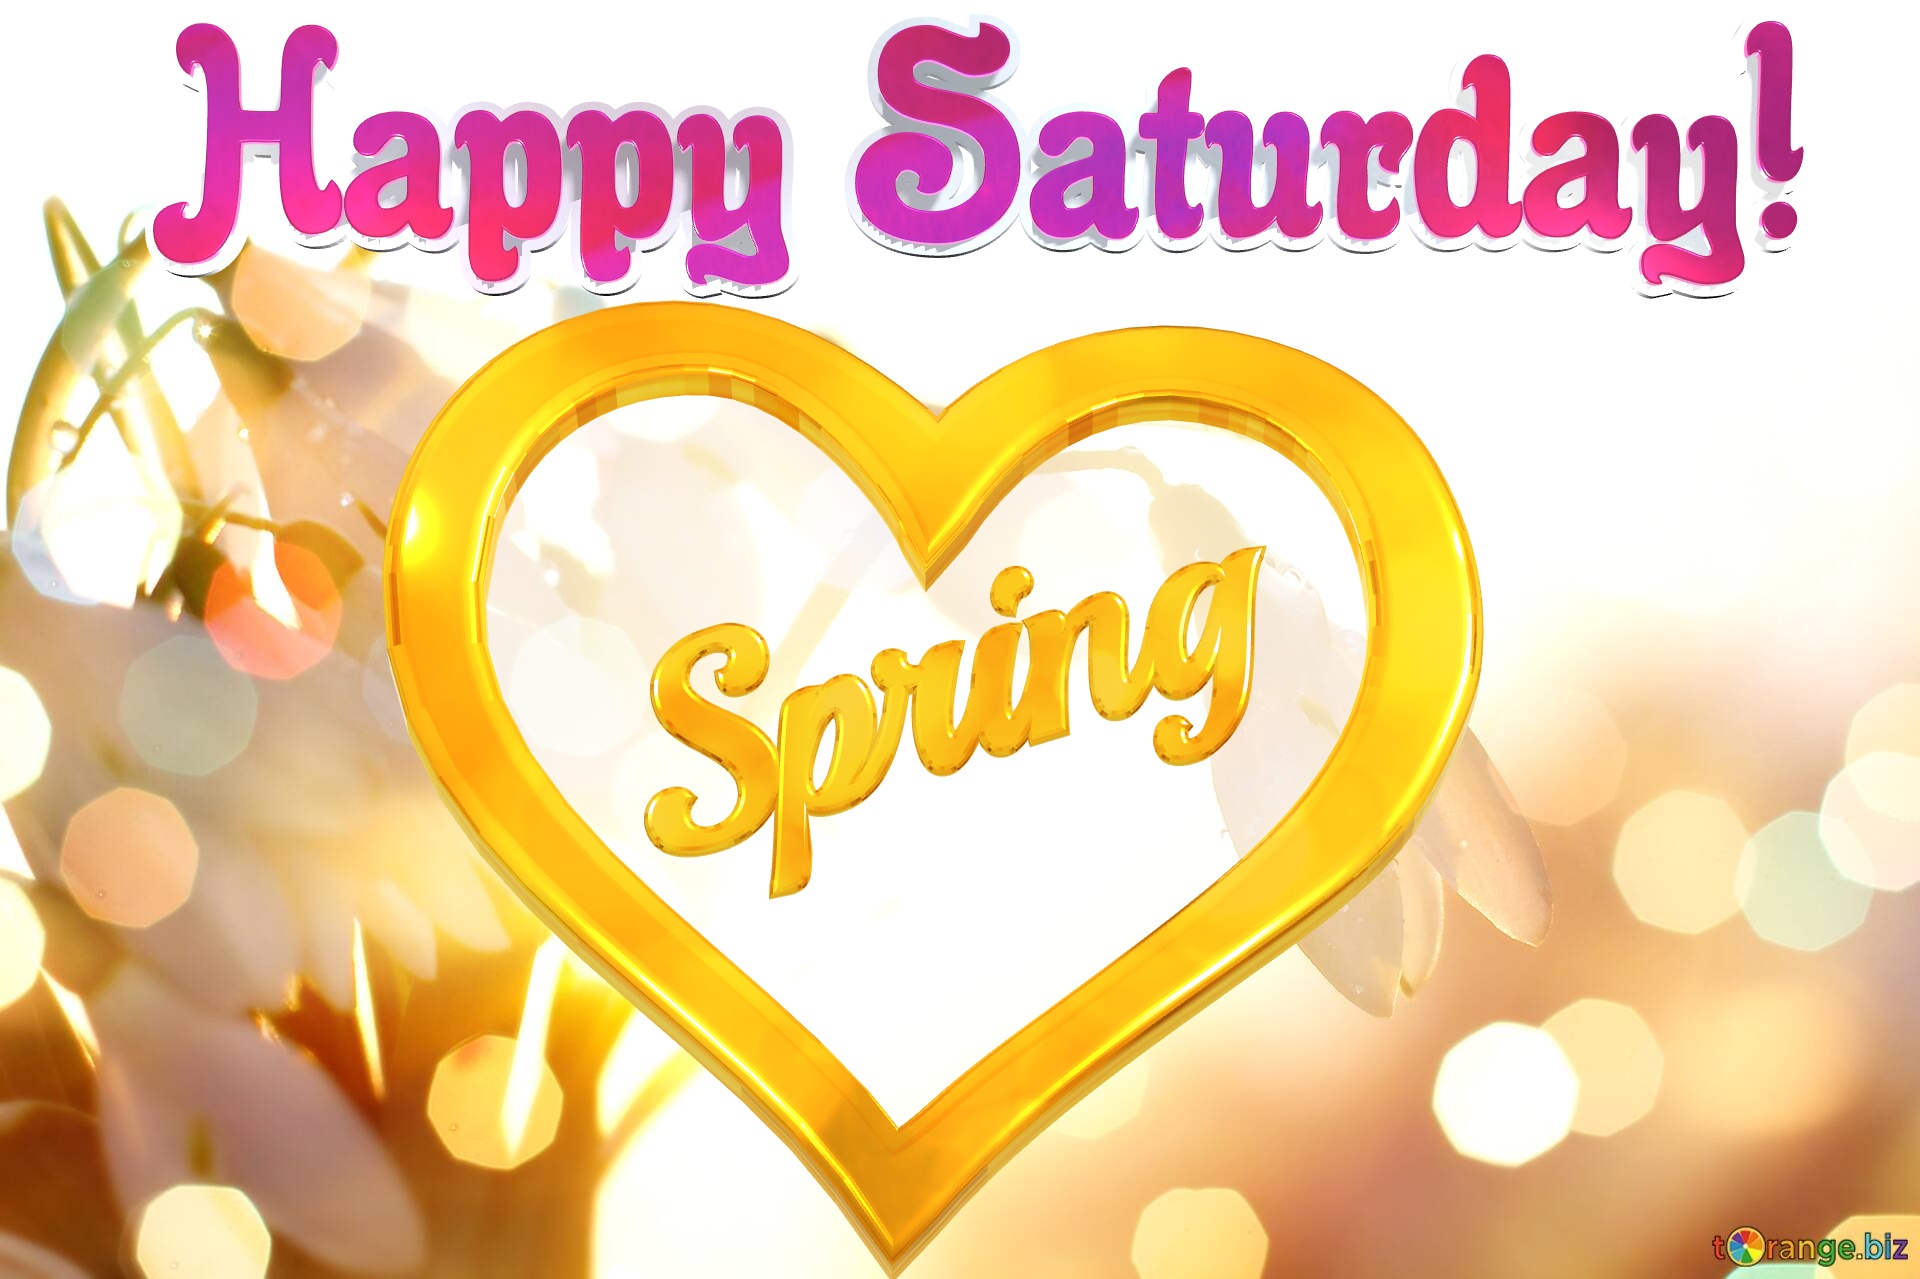  Happy Saturday! Spring   Spring background №0